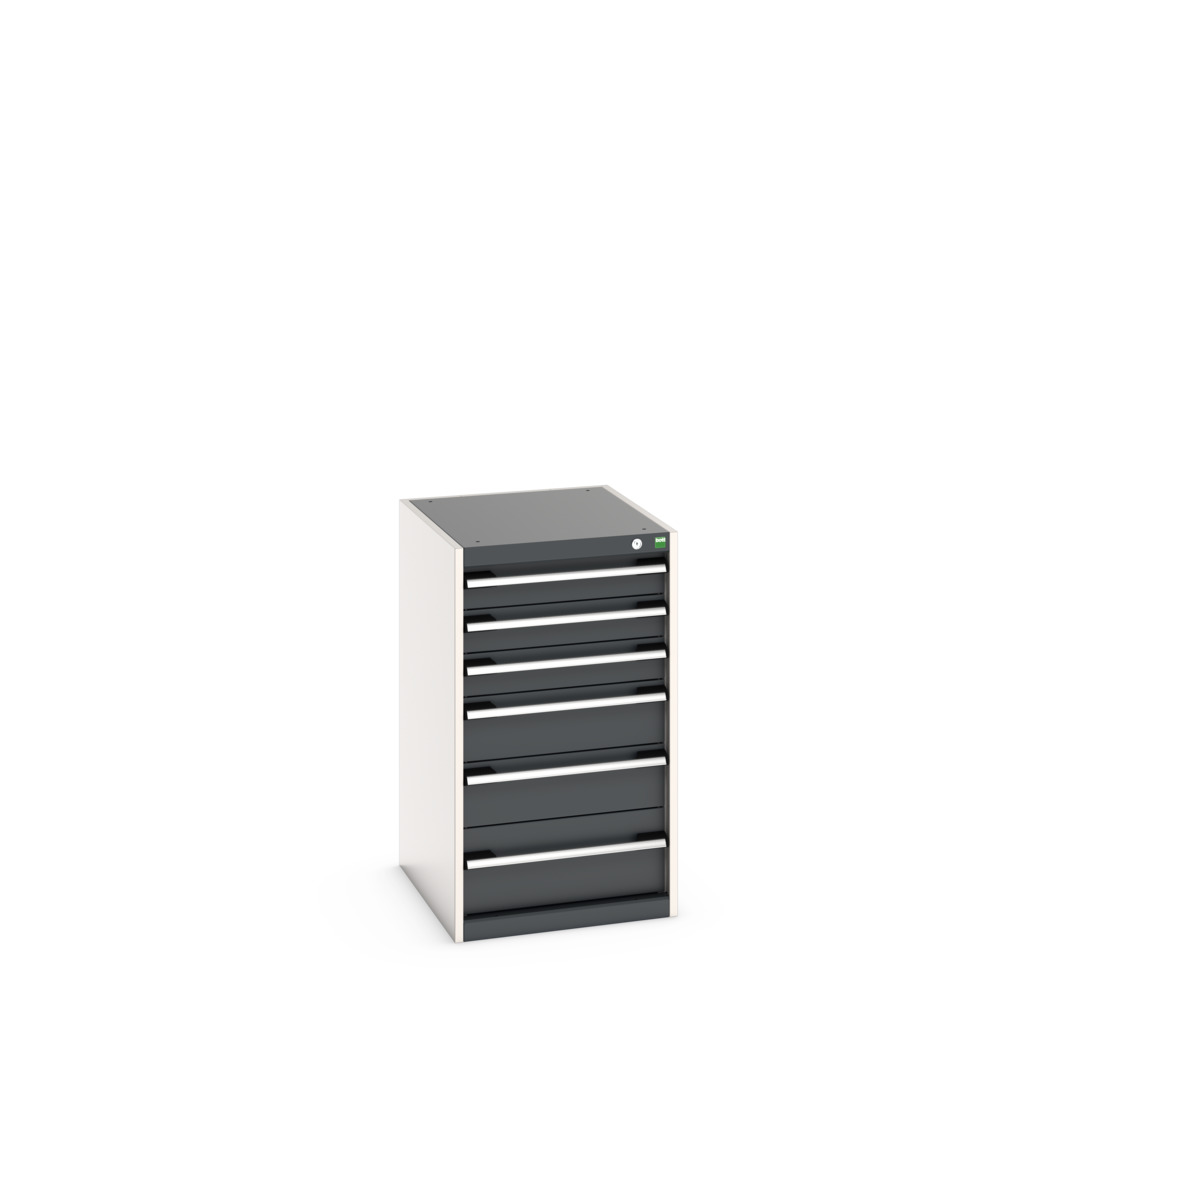 40018049. - cubio drawer cabinet